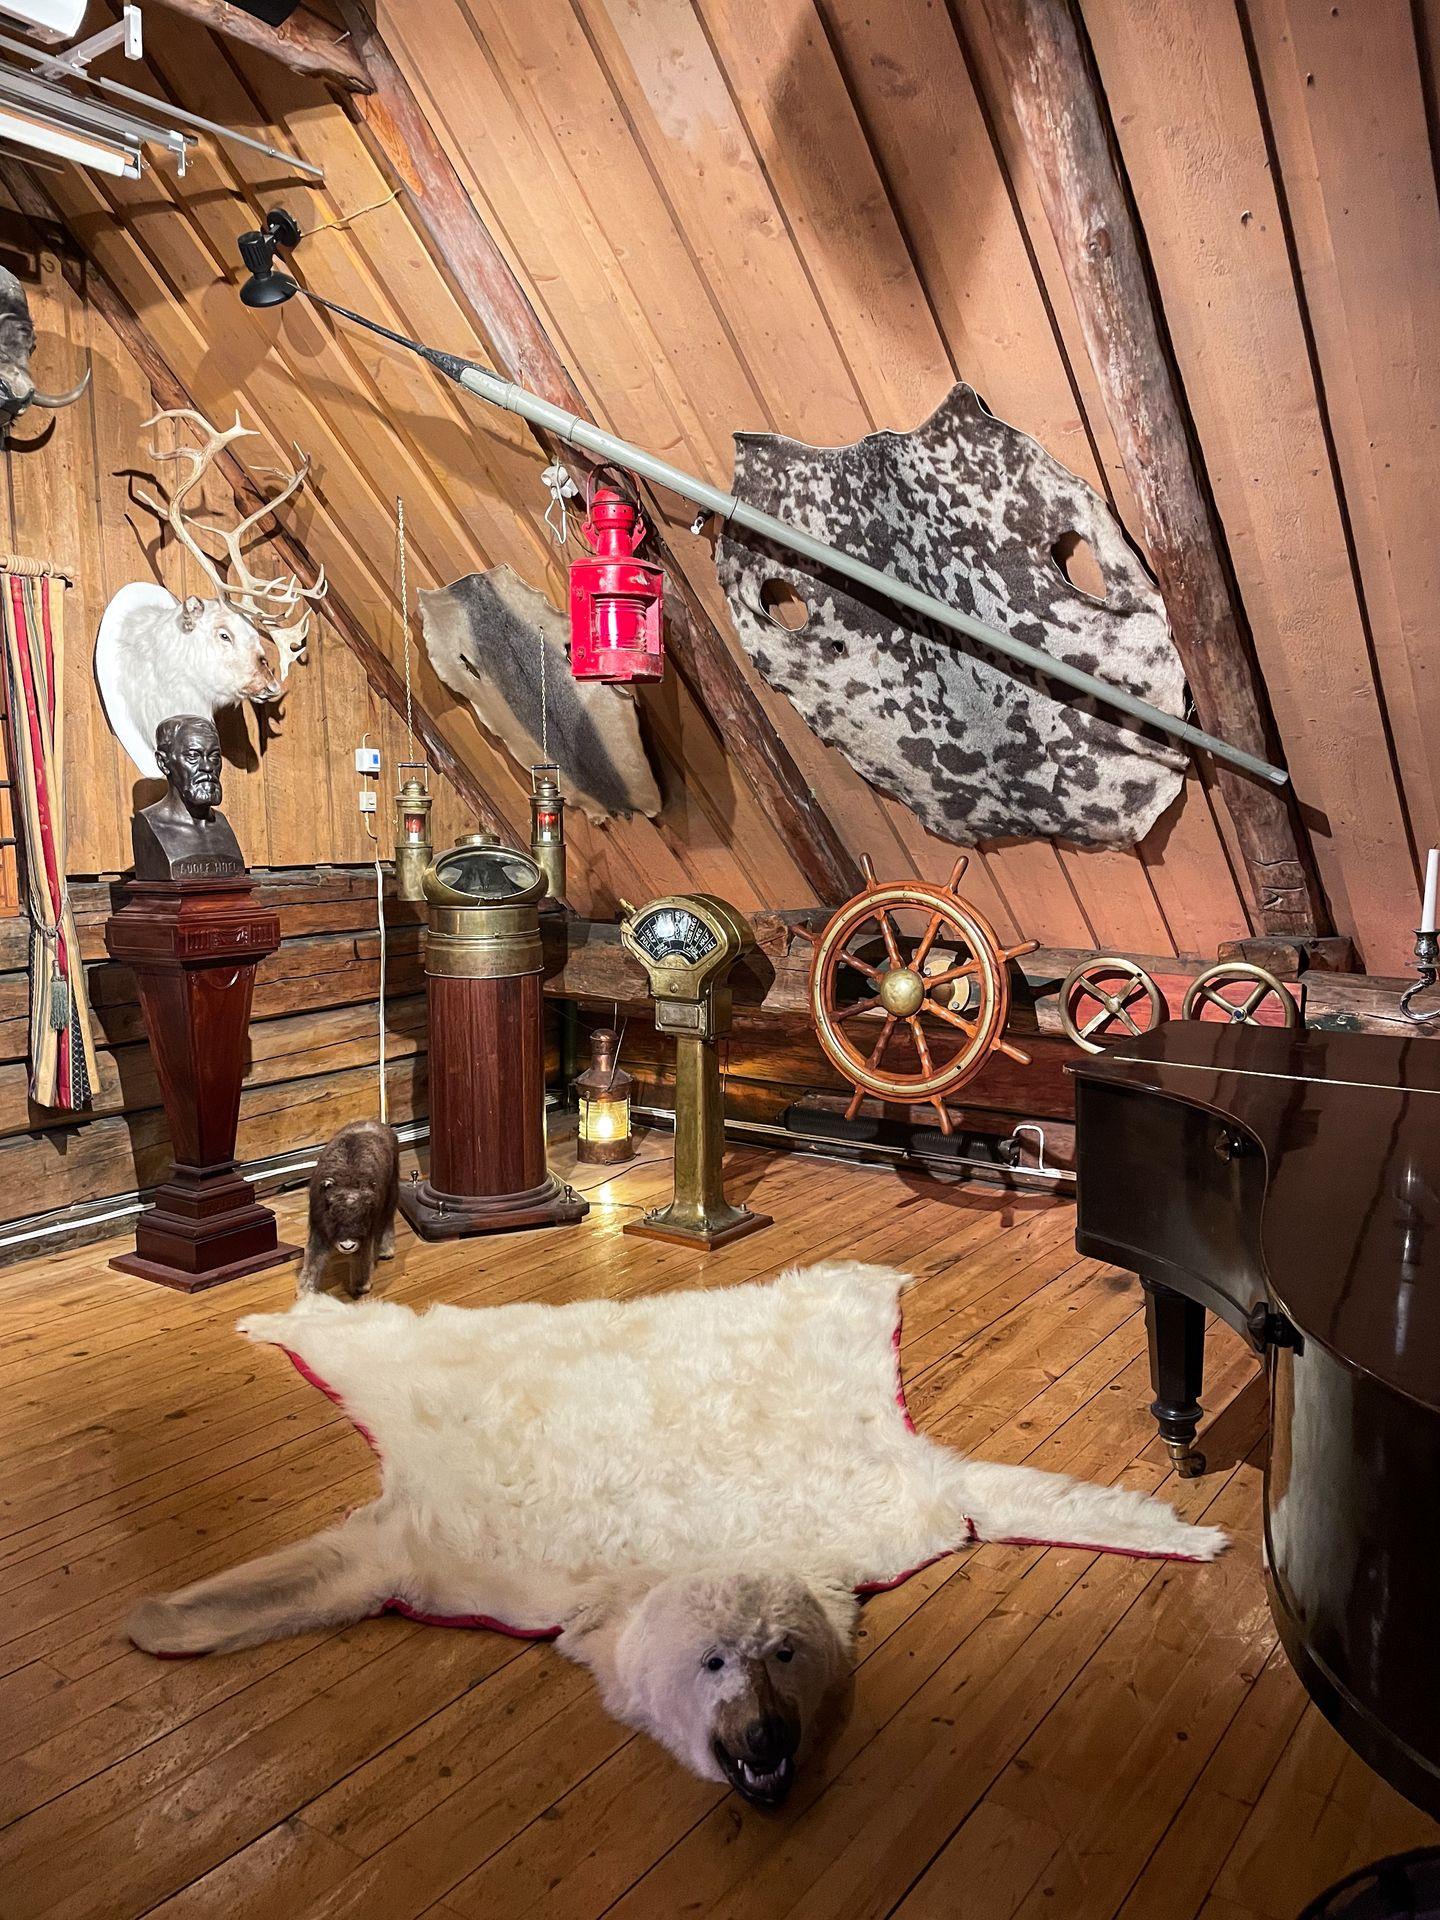 A Polar Bear rug, ship steering wheels and other items inside the Polar Museum.